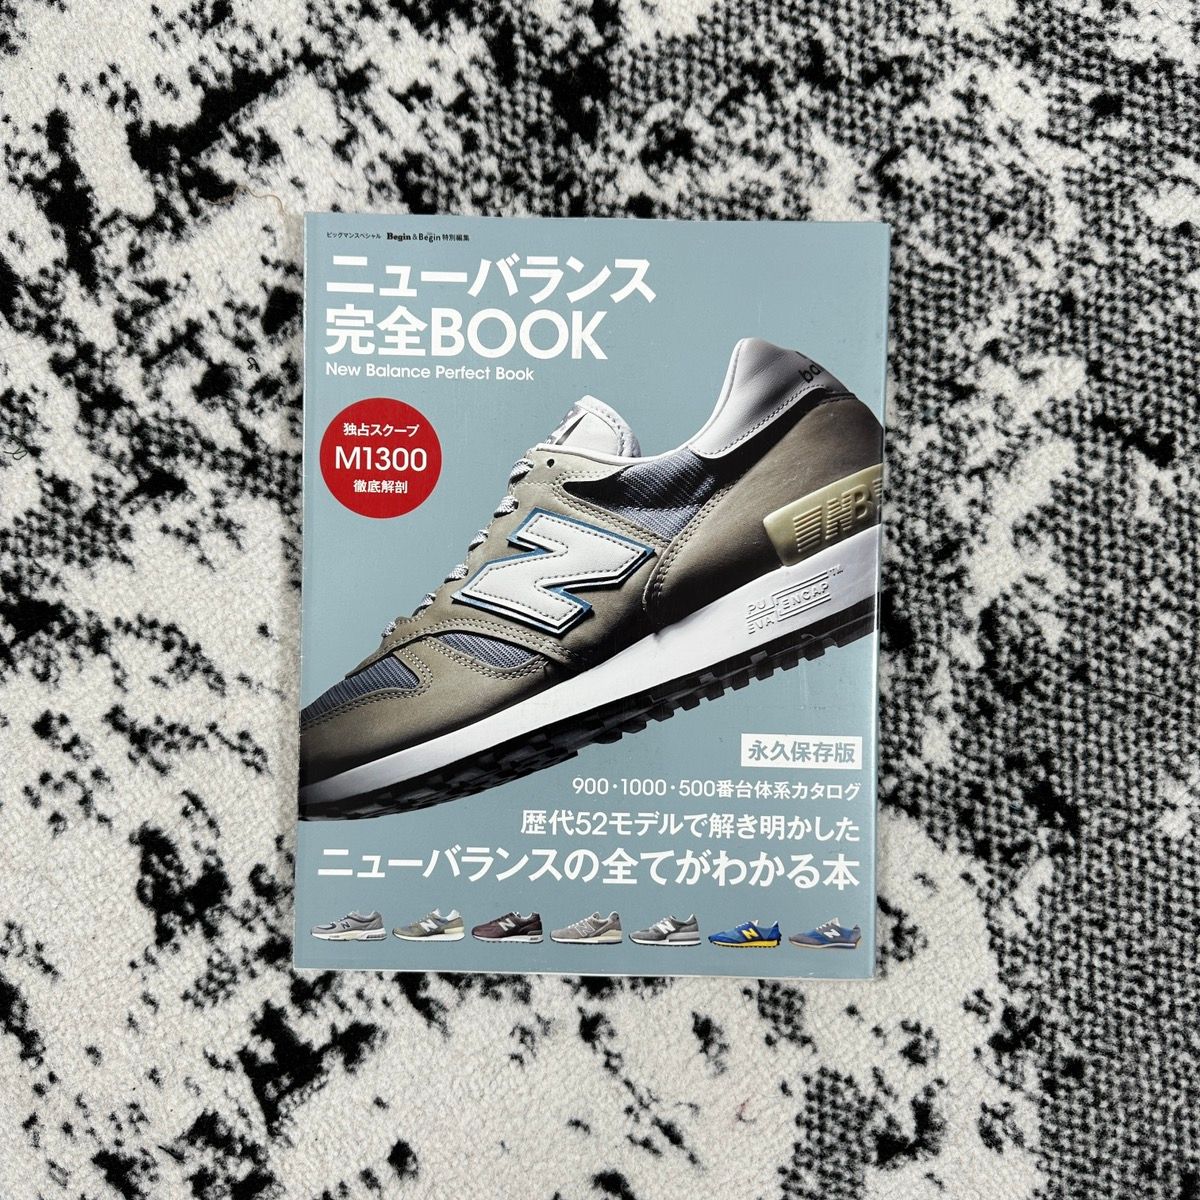 NEW BALANCE PERFECT BOOK 2020 JAPANESE M1300 - 1